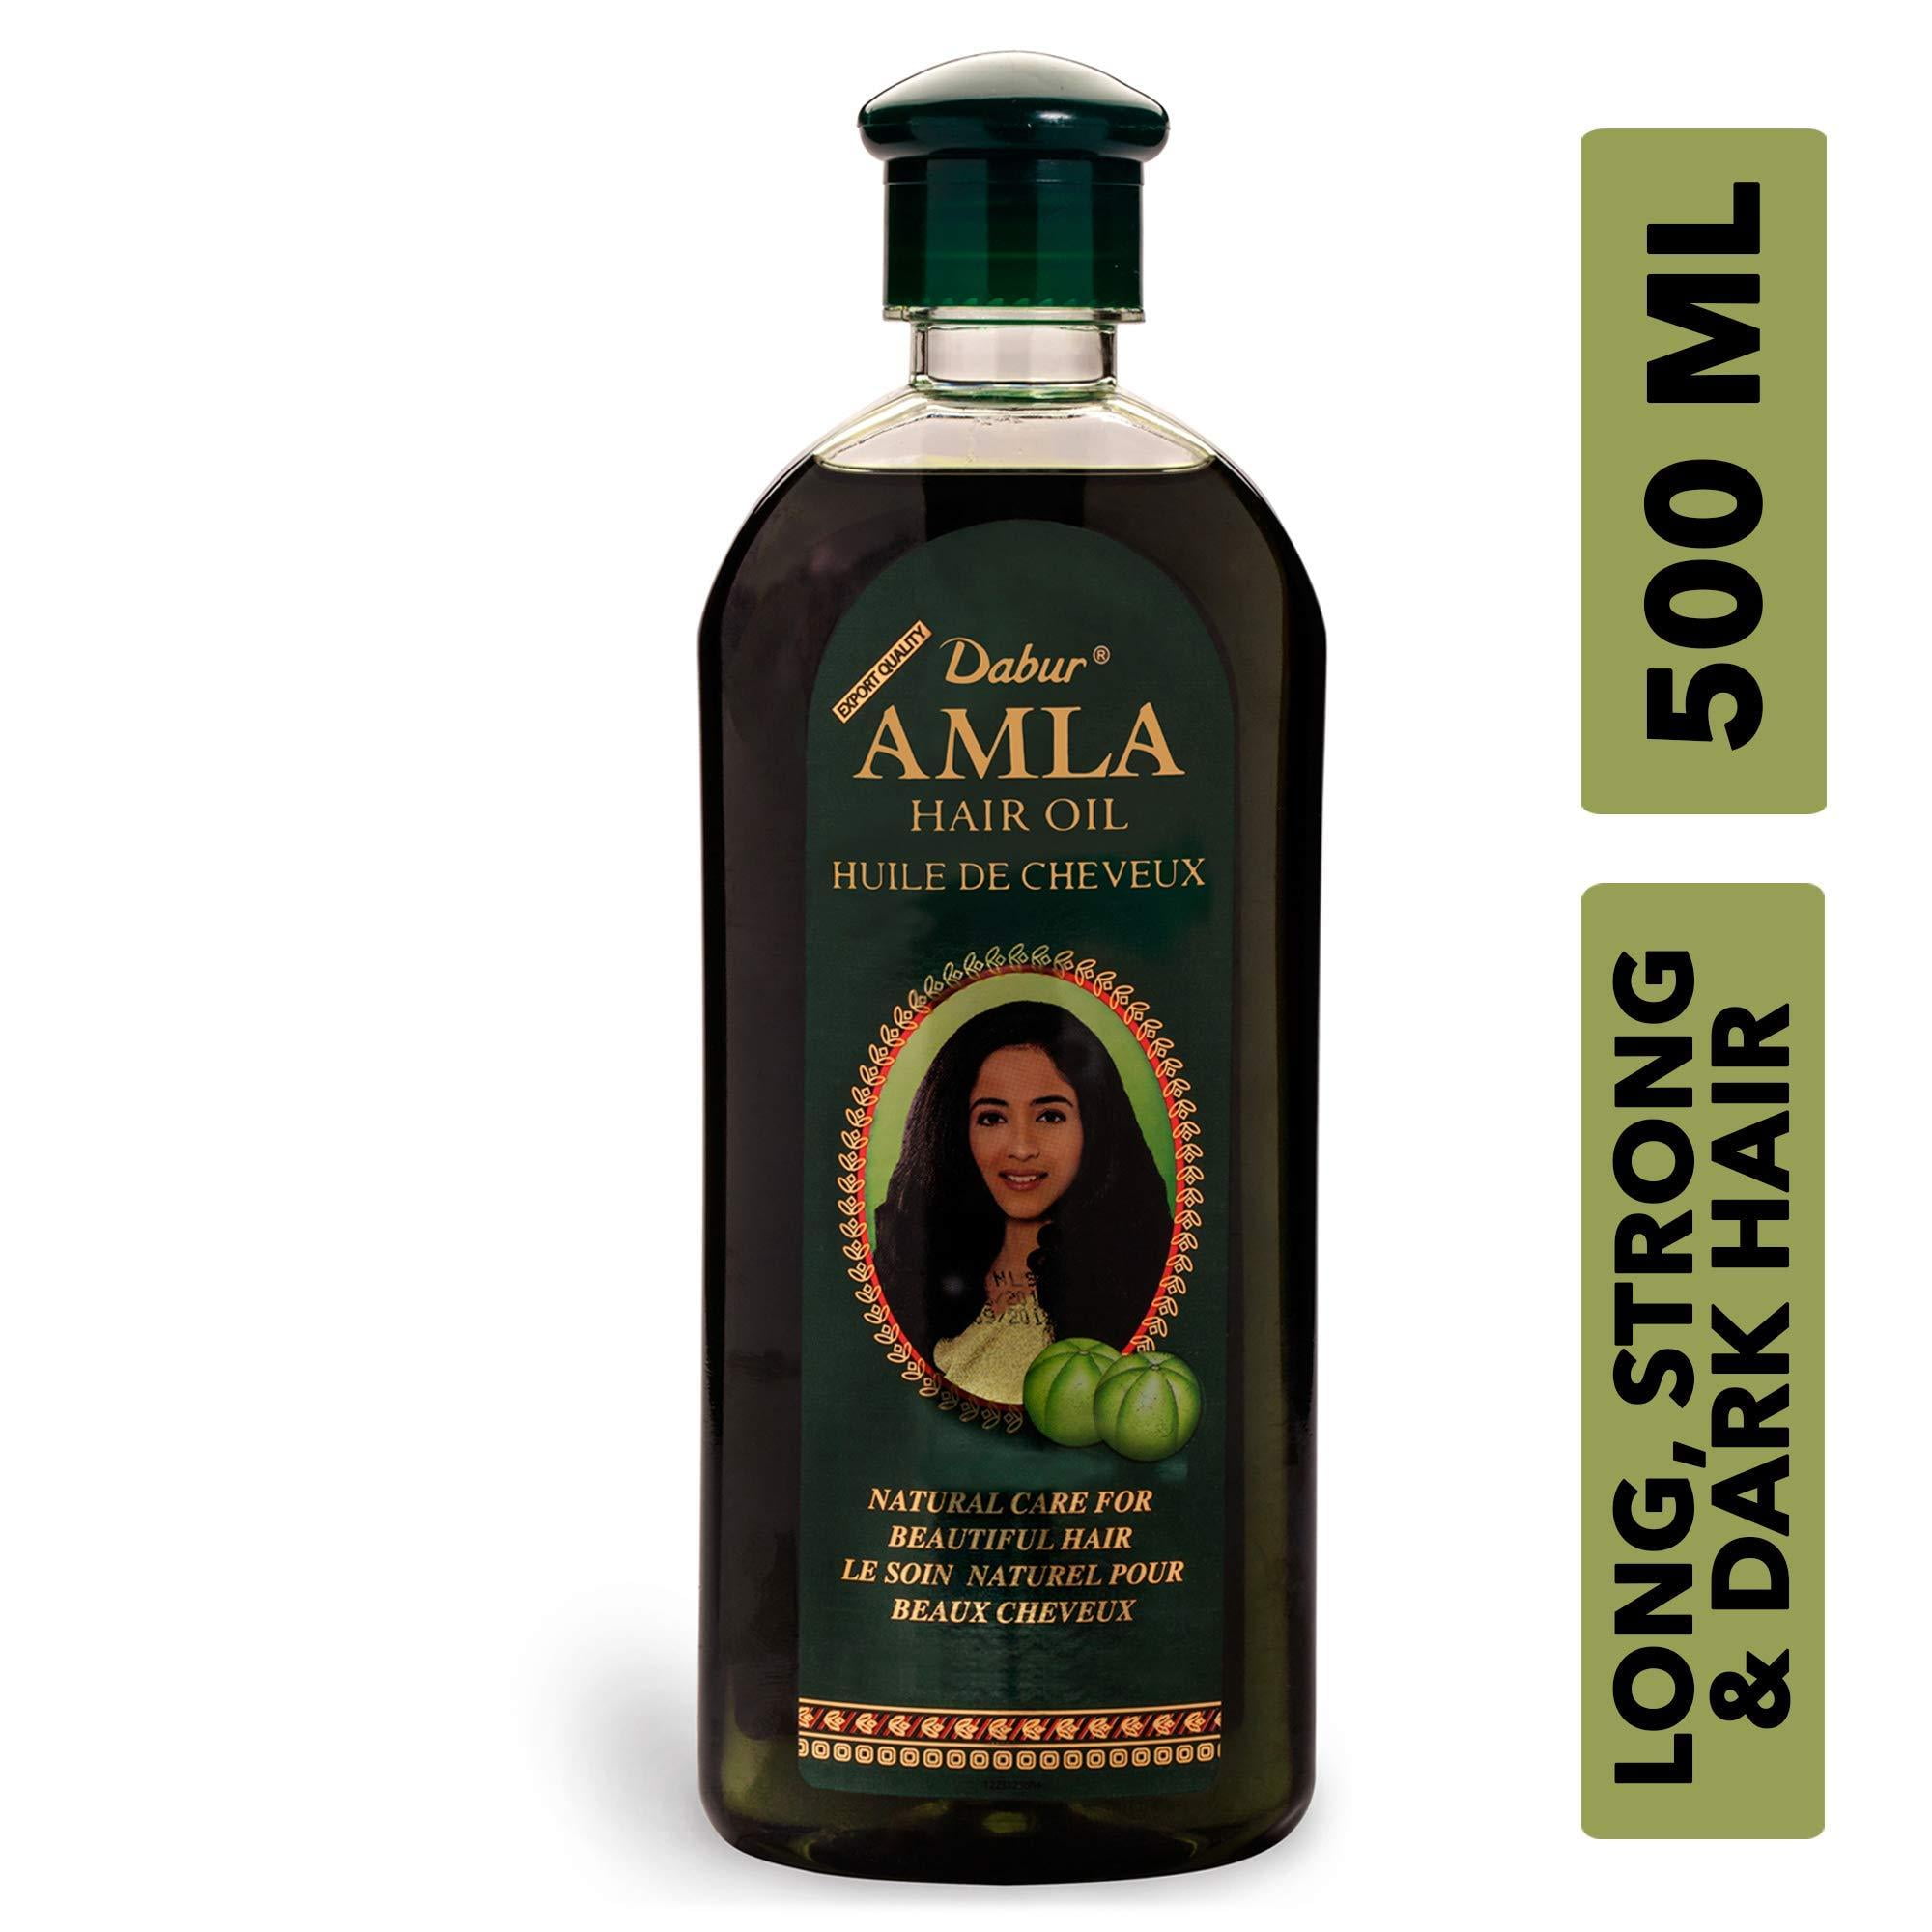 Dabur Amla Hair oil - Natural care for beautiful hair, 500ml 